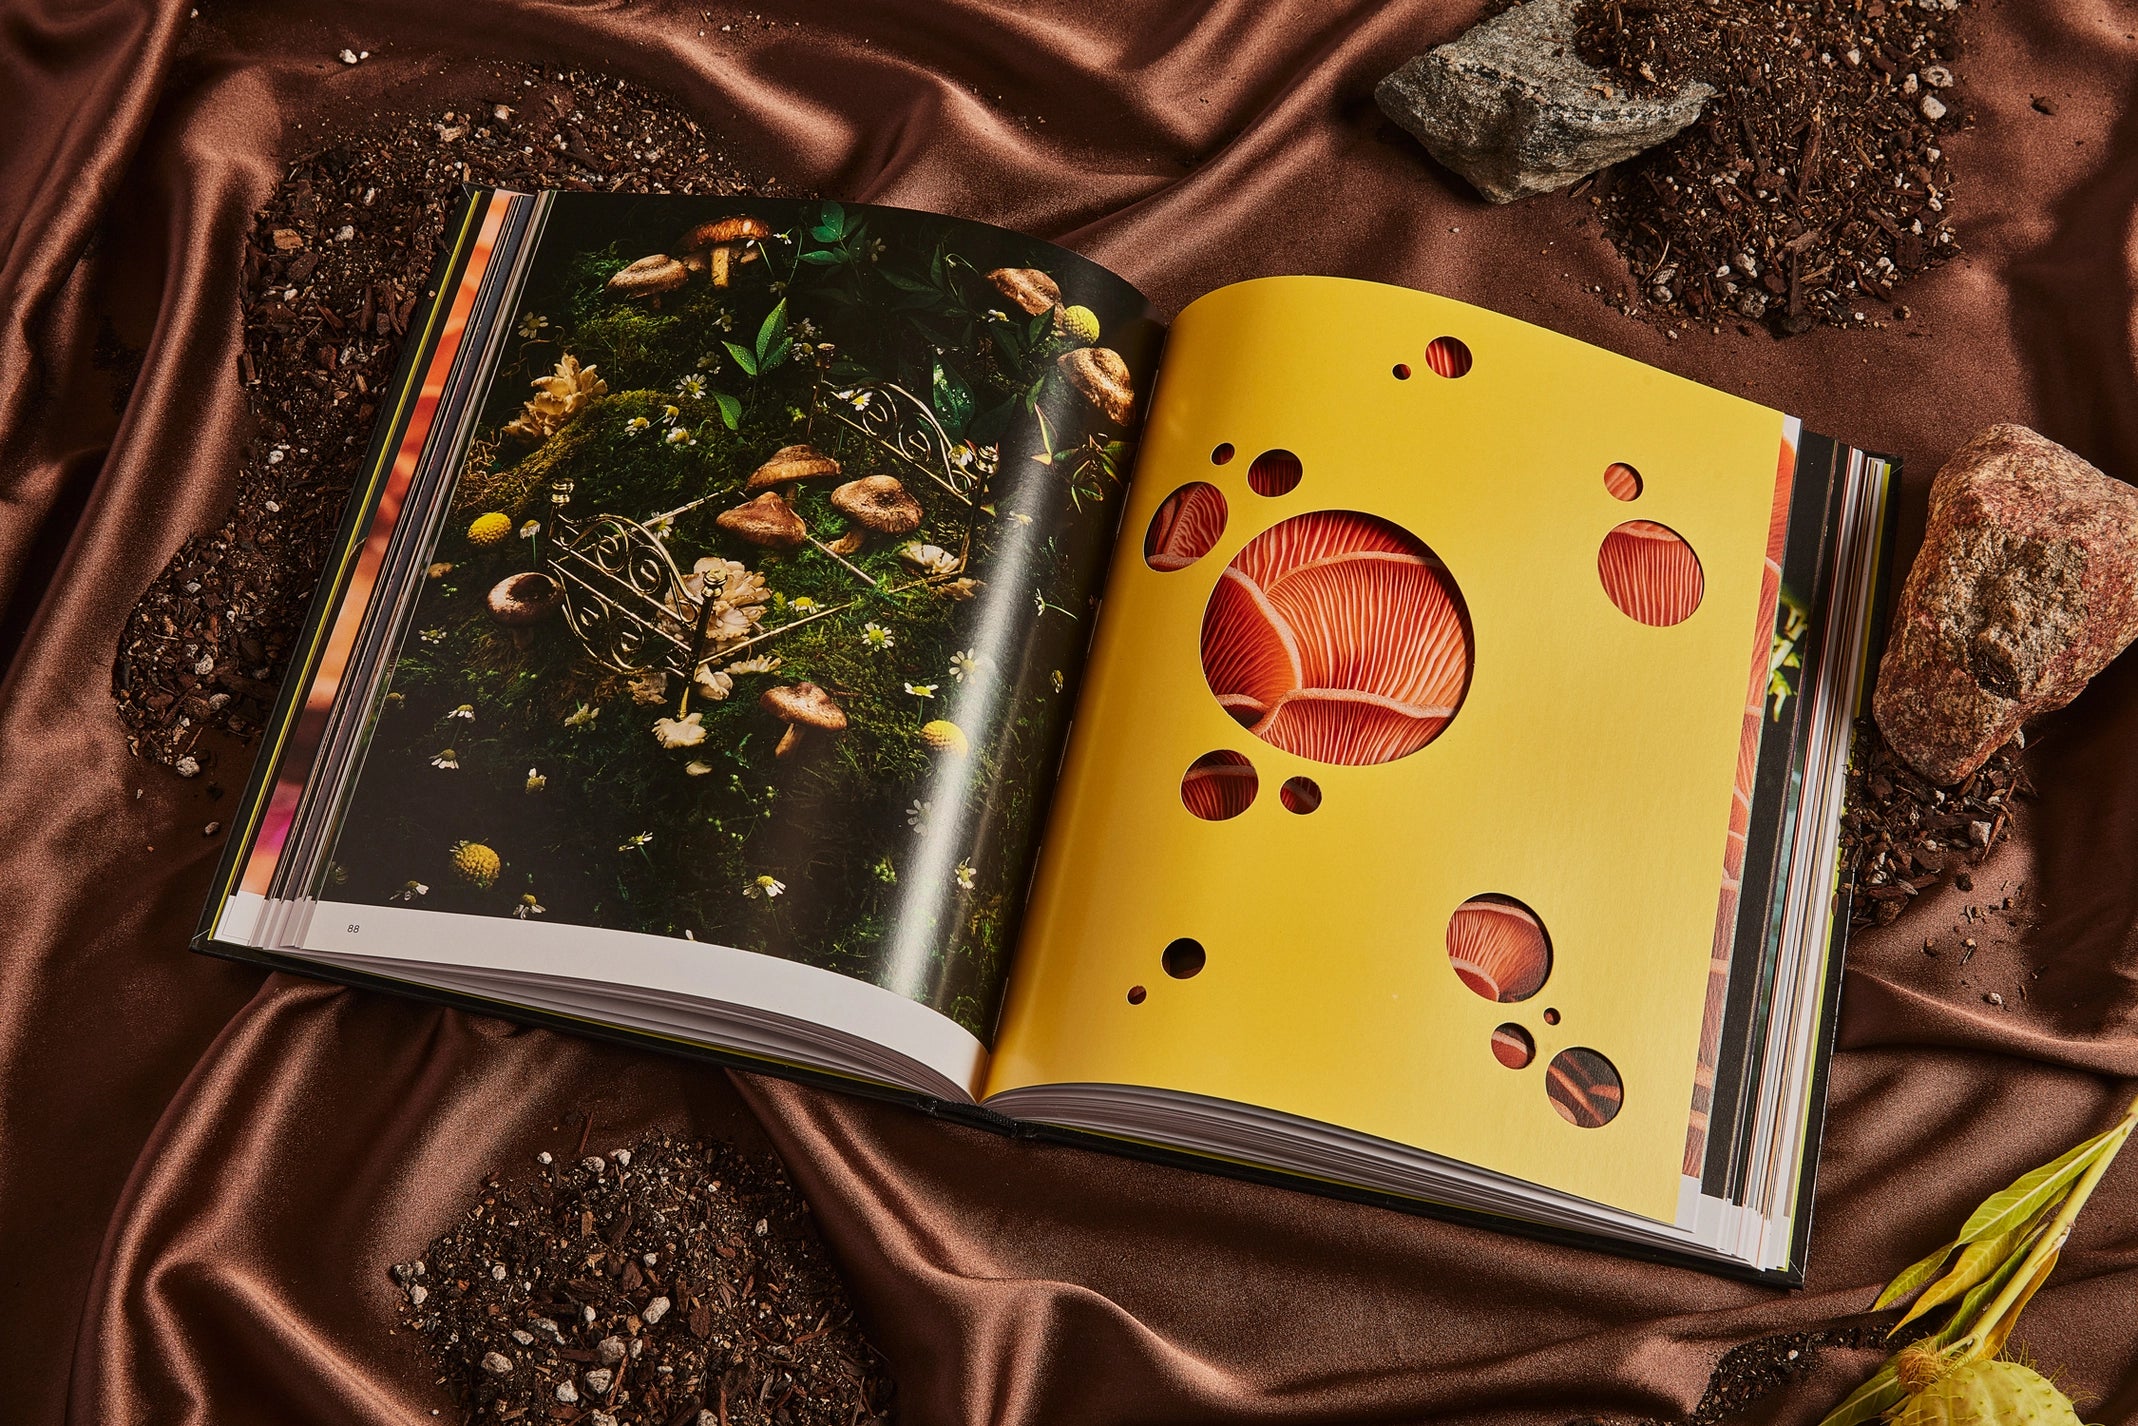 Spores: libro de fotografía de hongos mágicos